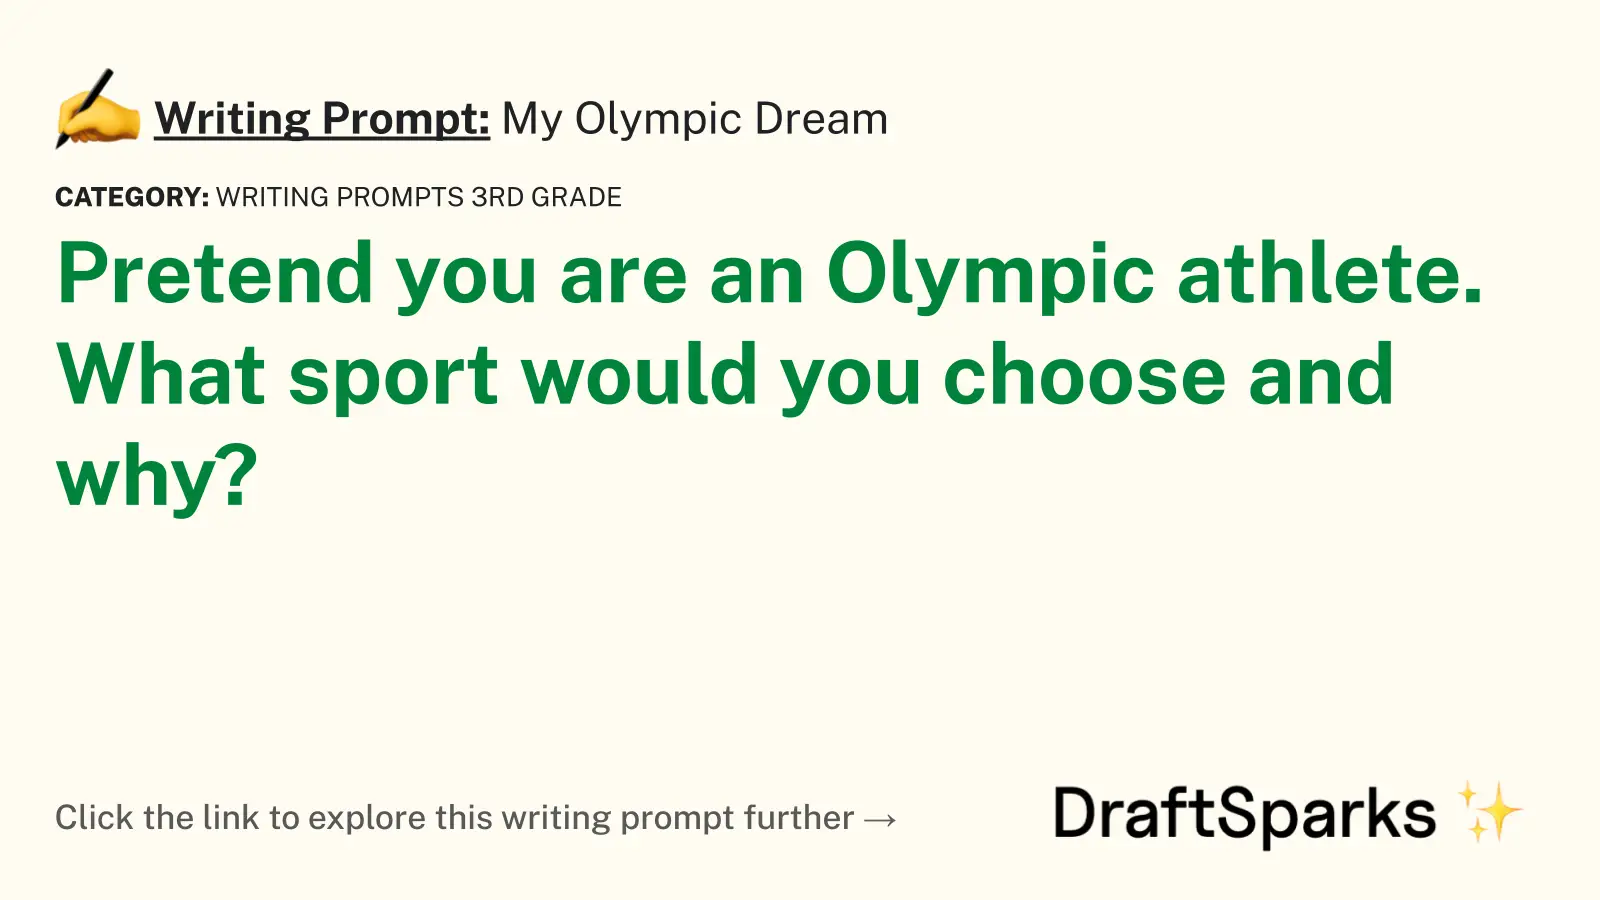 My Olympic Dream